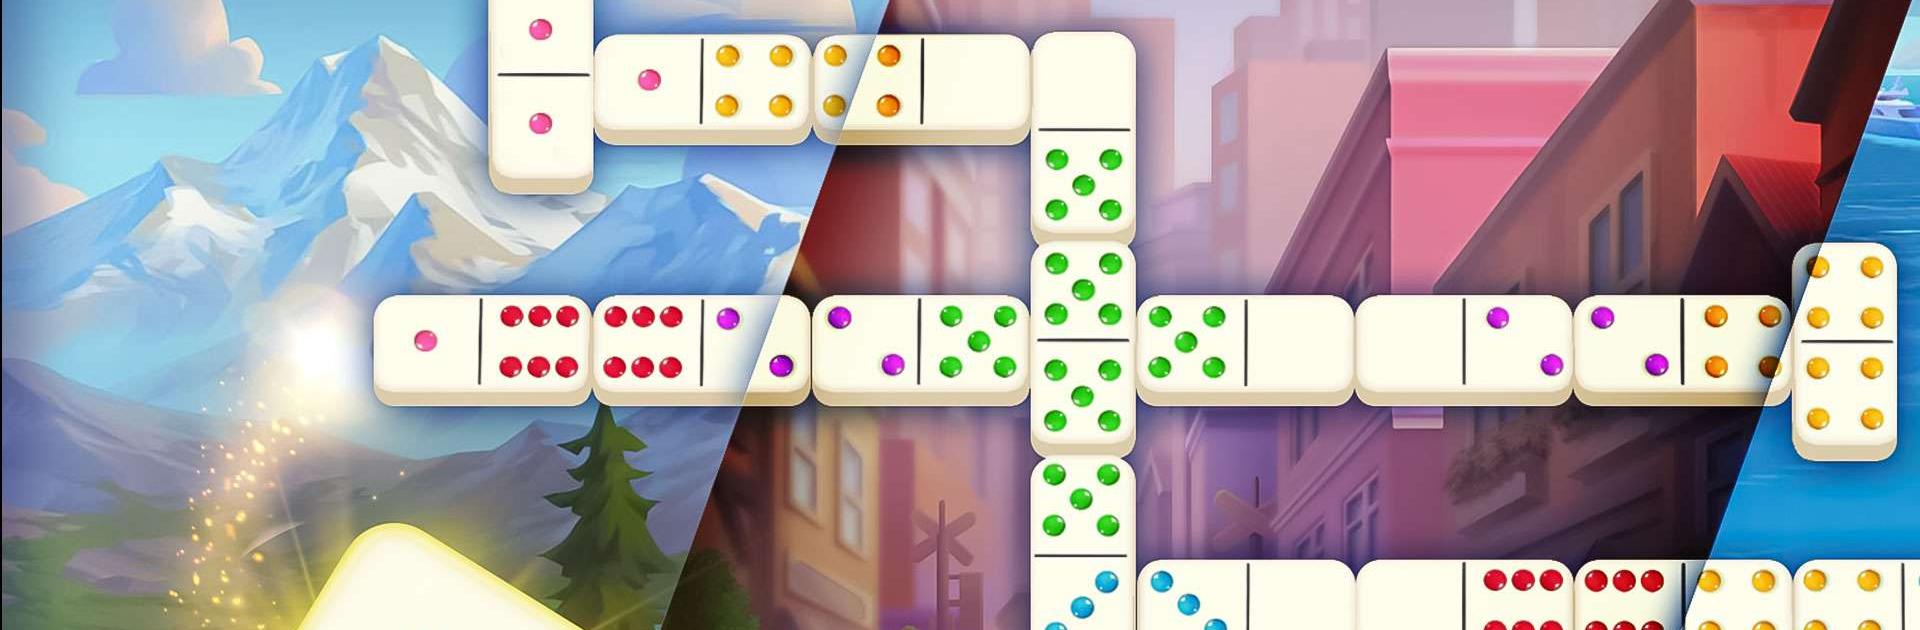 Domino Go: Online-Brettspiel